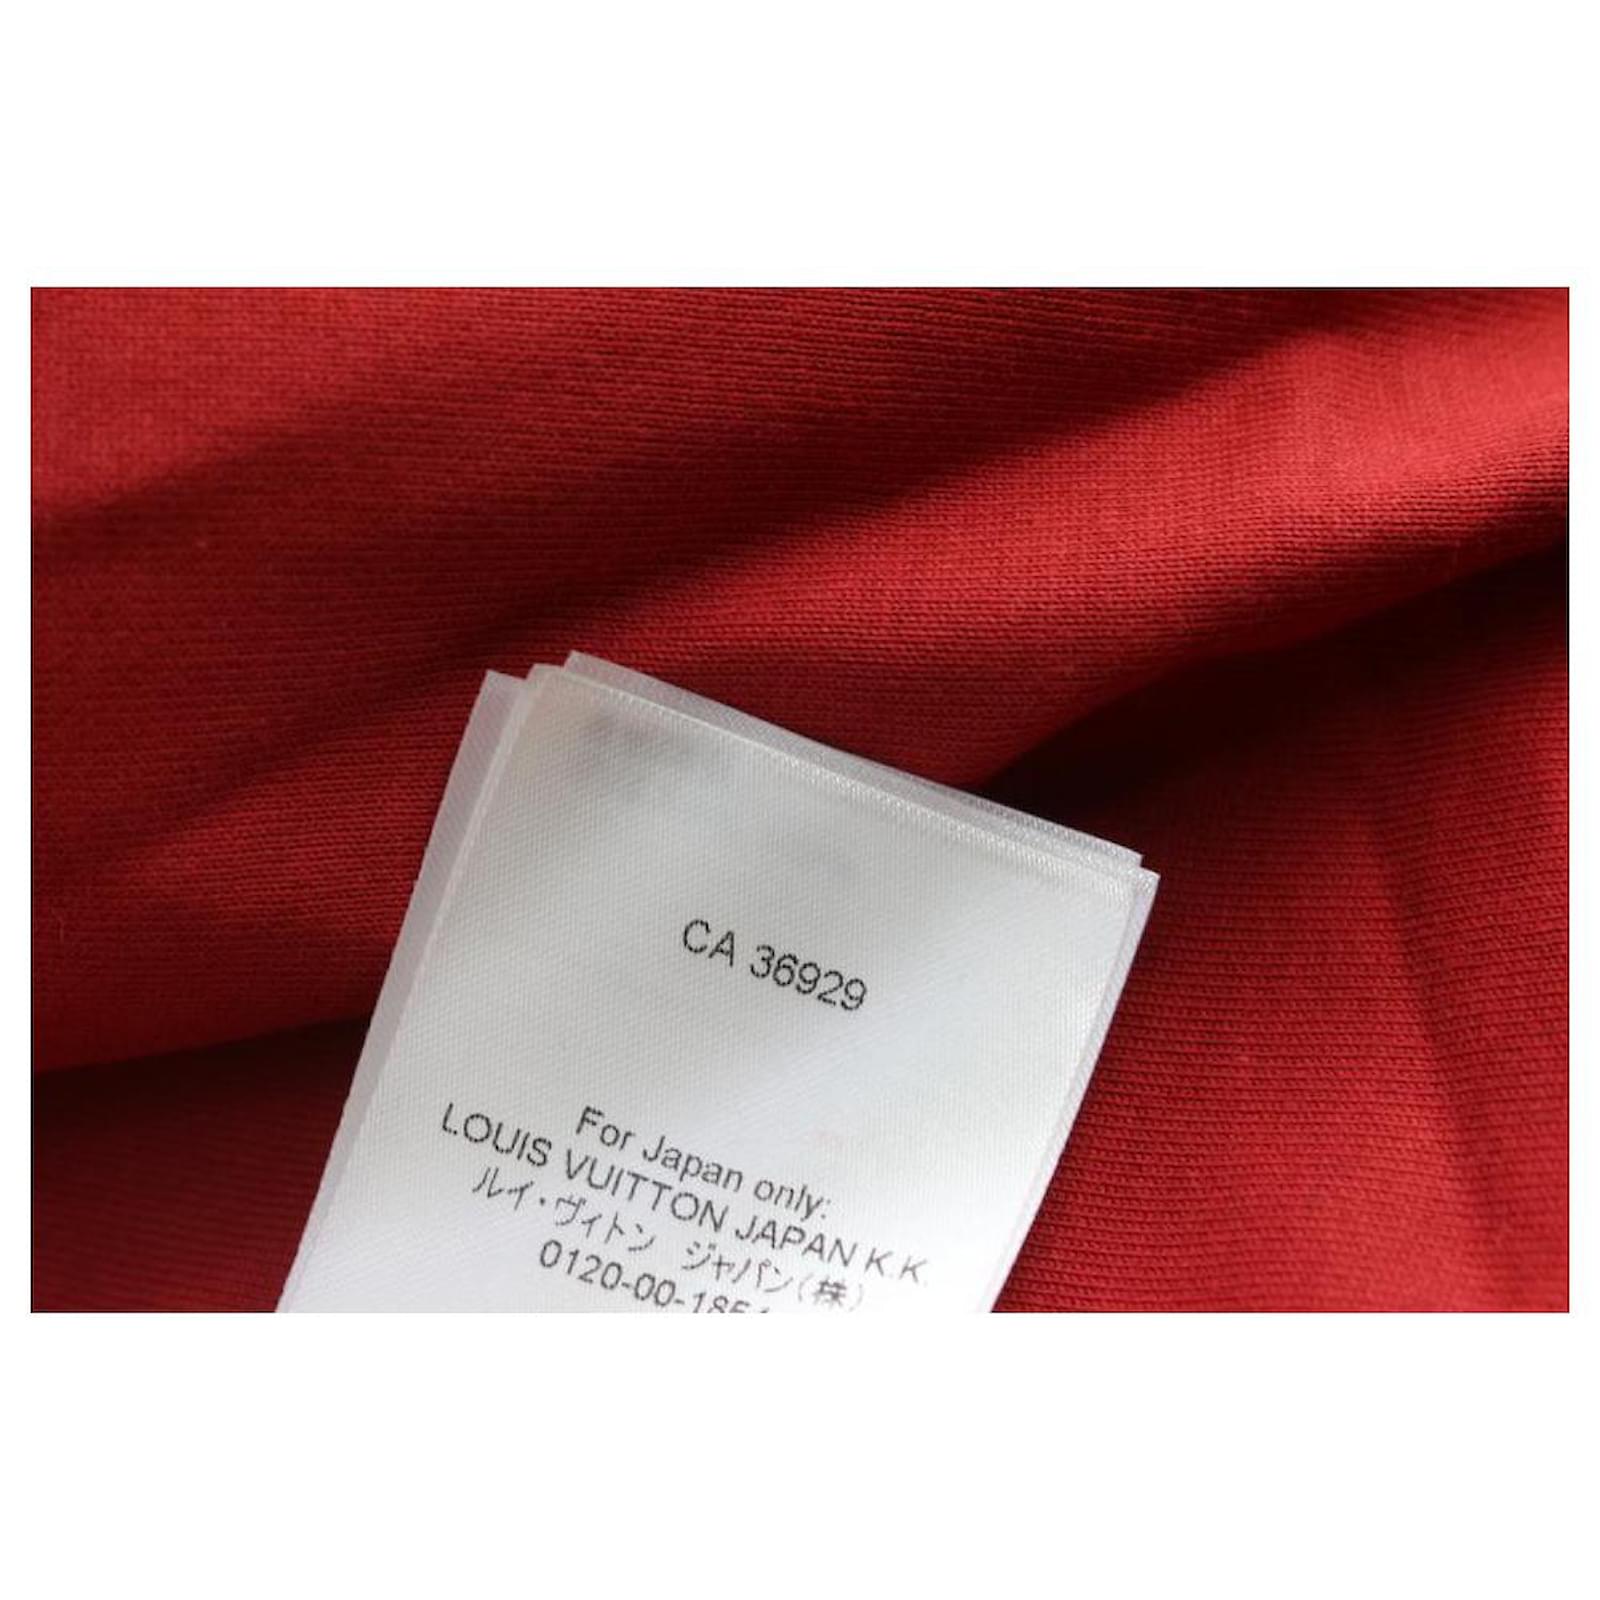 Louis Vuitton Men's Large Nigo Teddy Jacquard Red Damier Fleece